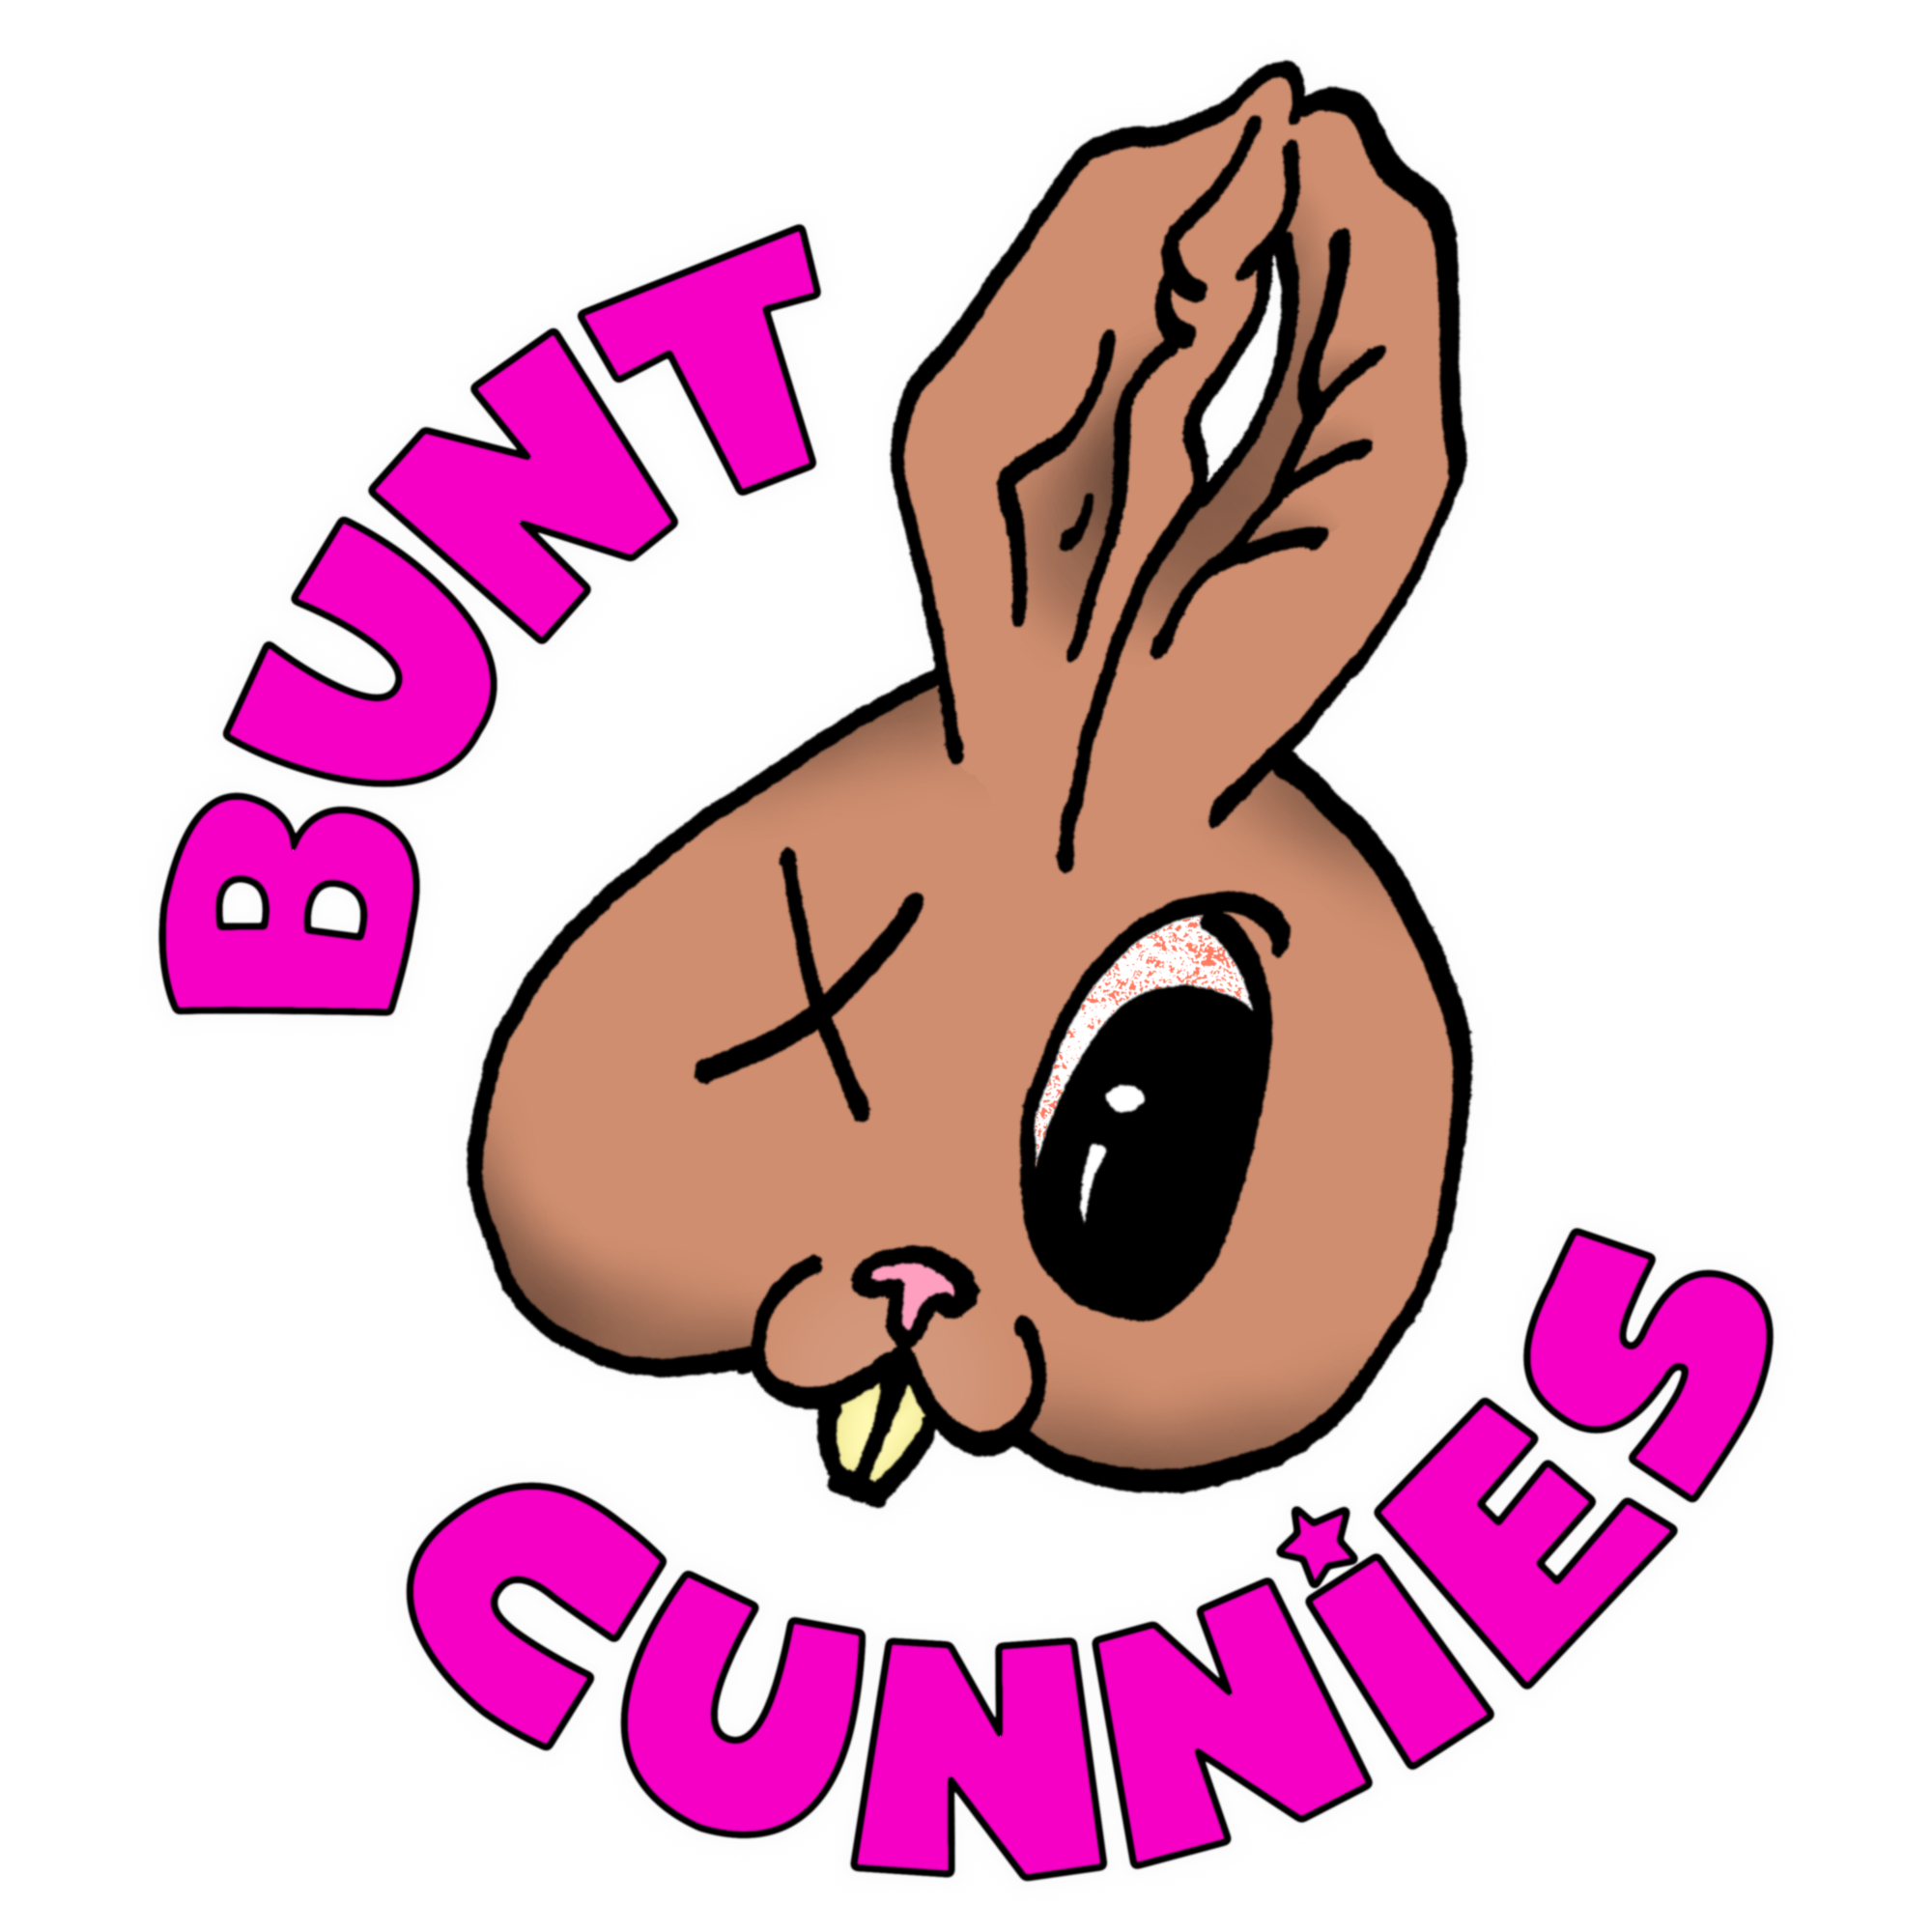 Bunt Cunnies